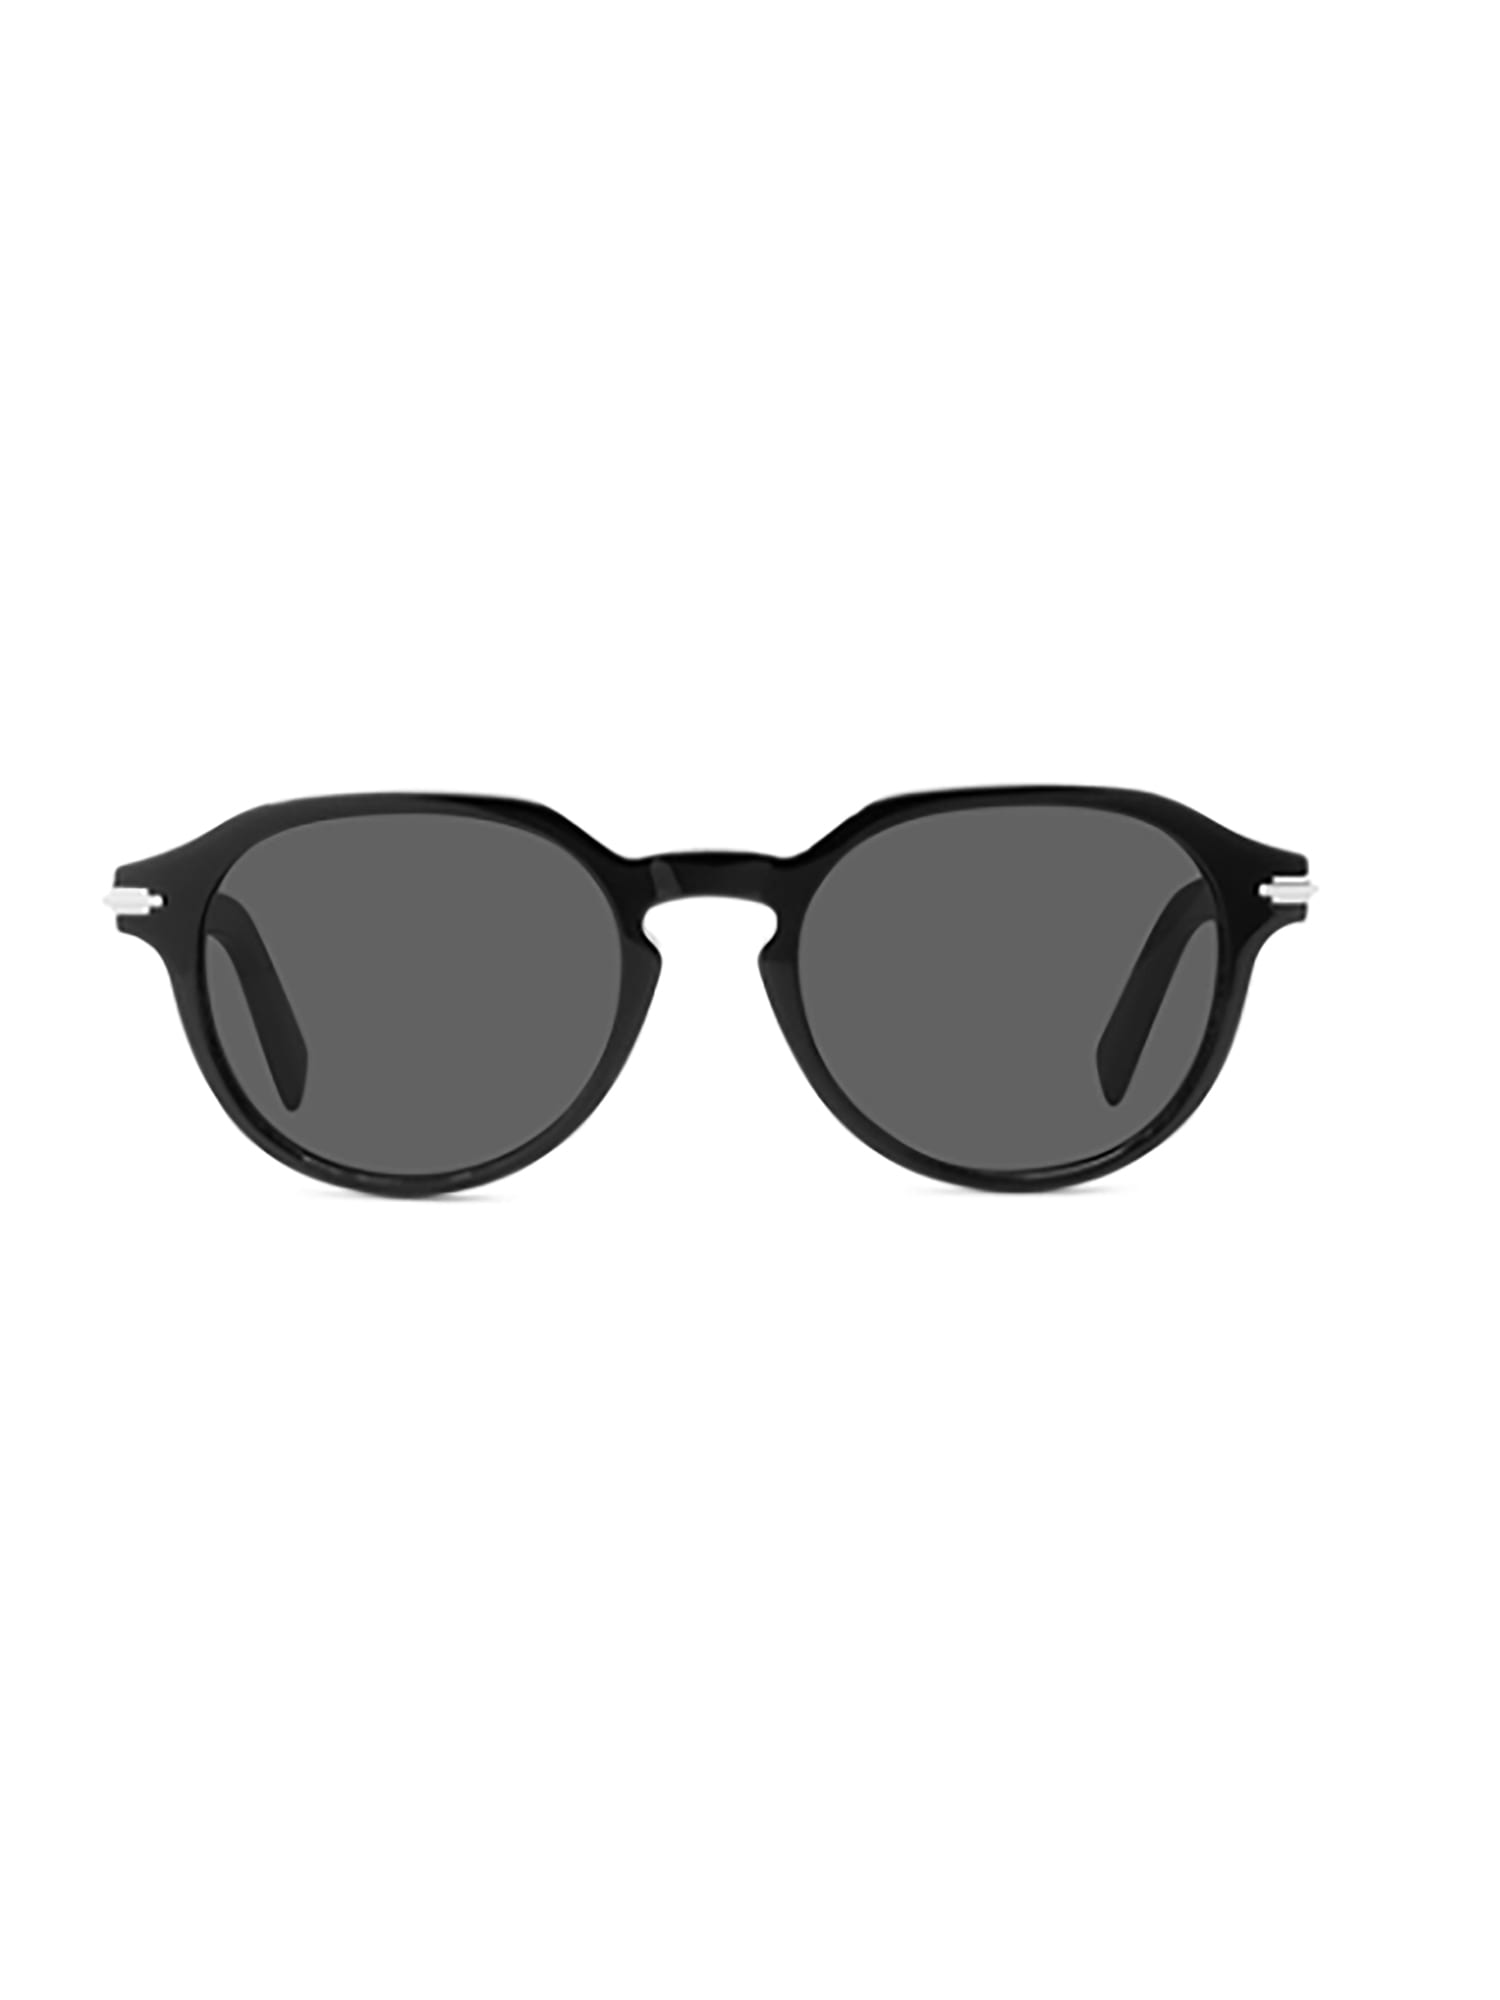 Dior Blacksuit R2i Sunglasses In Black